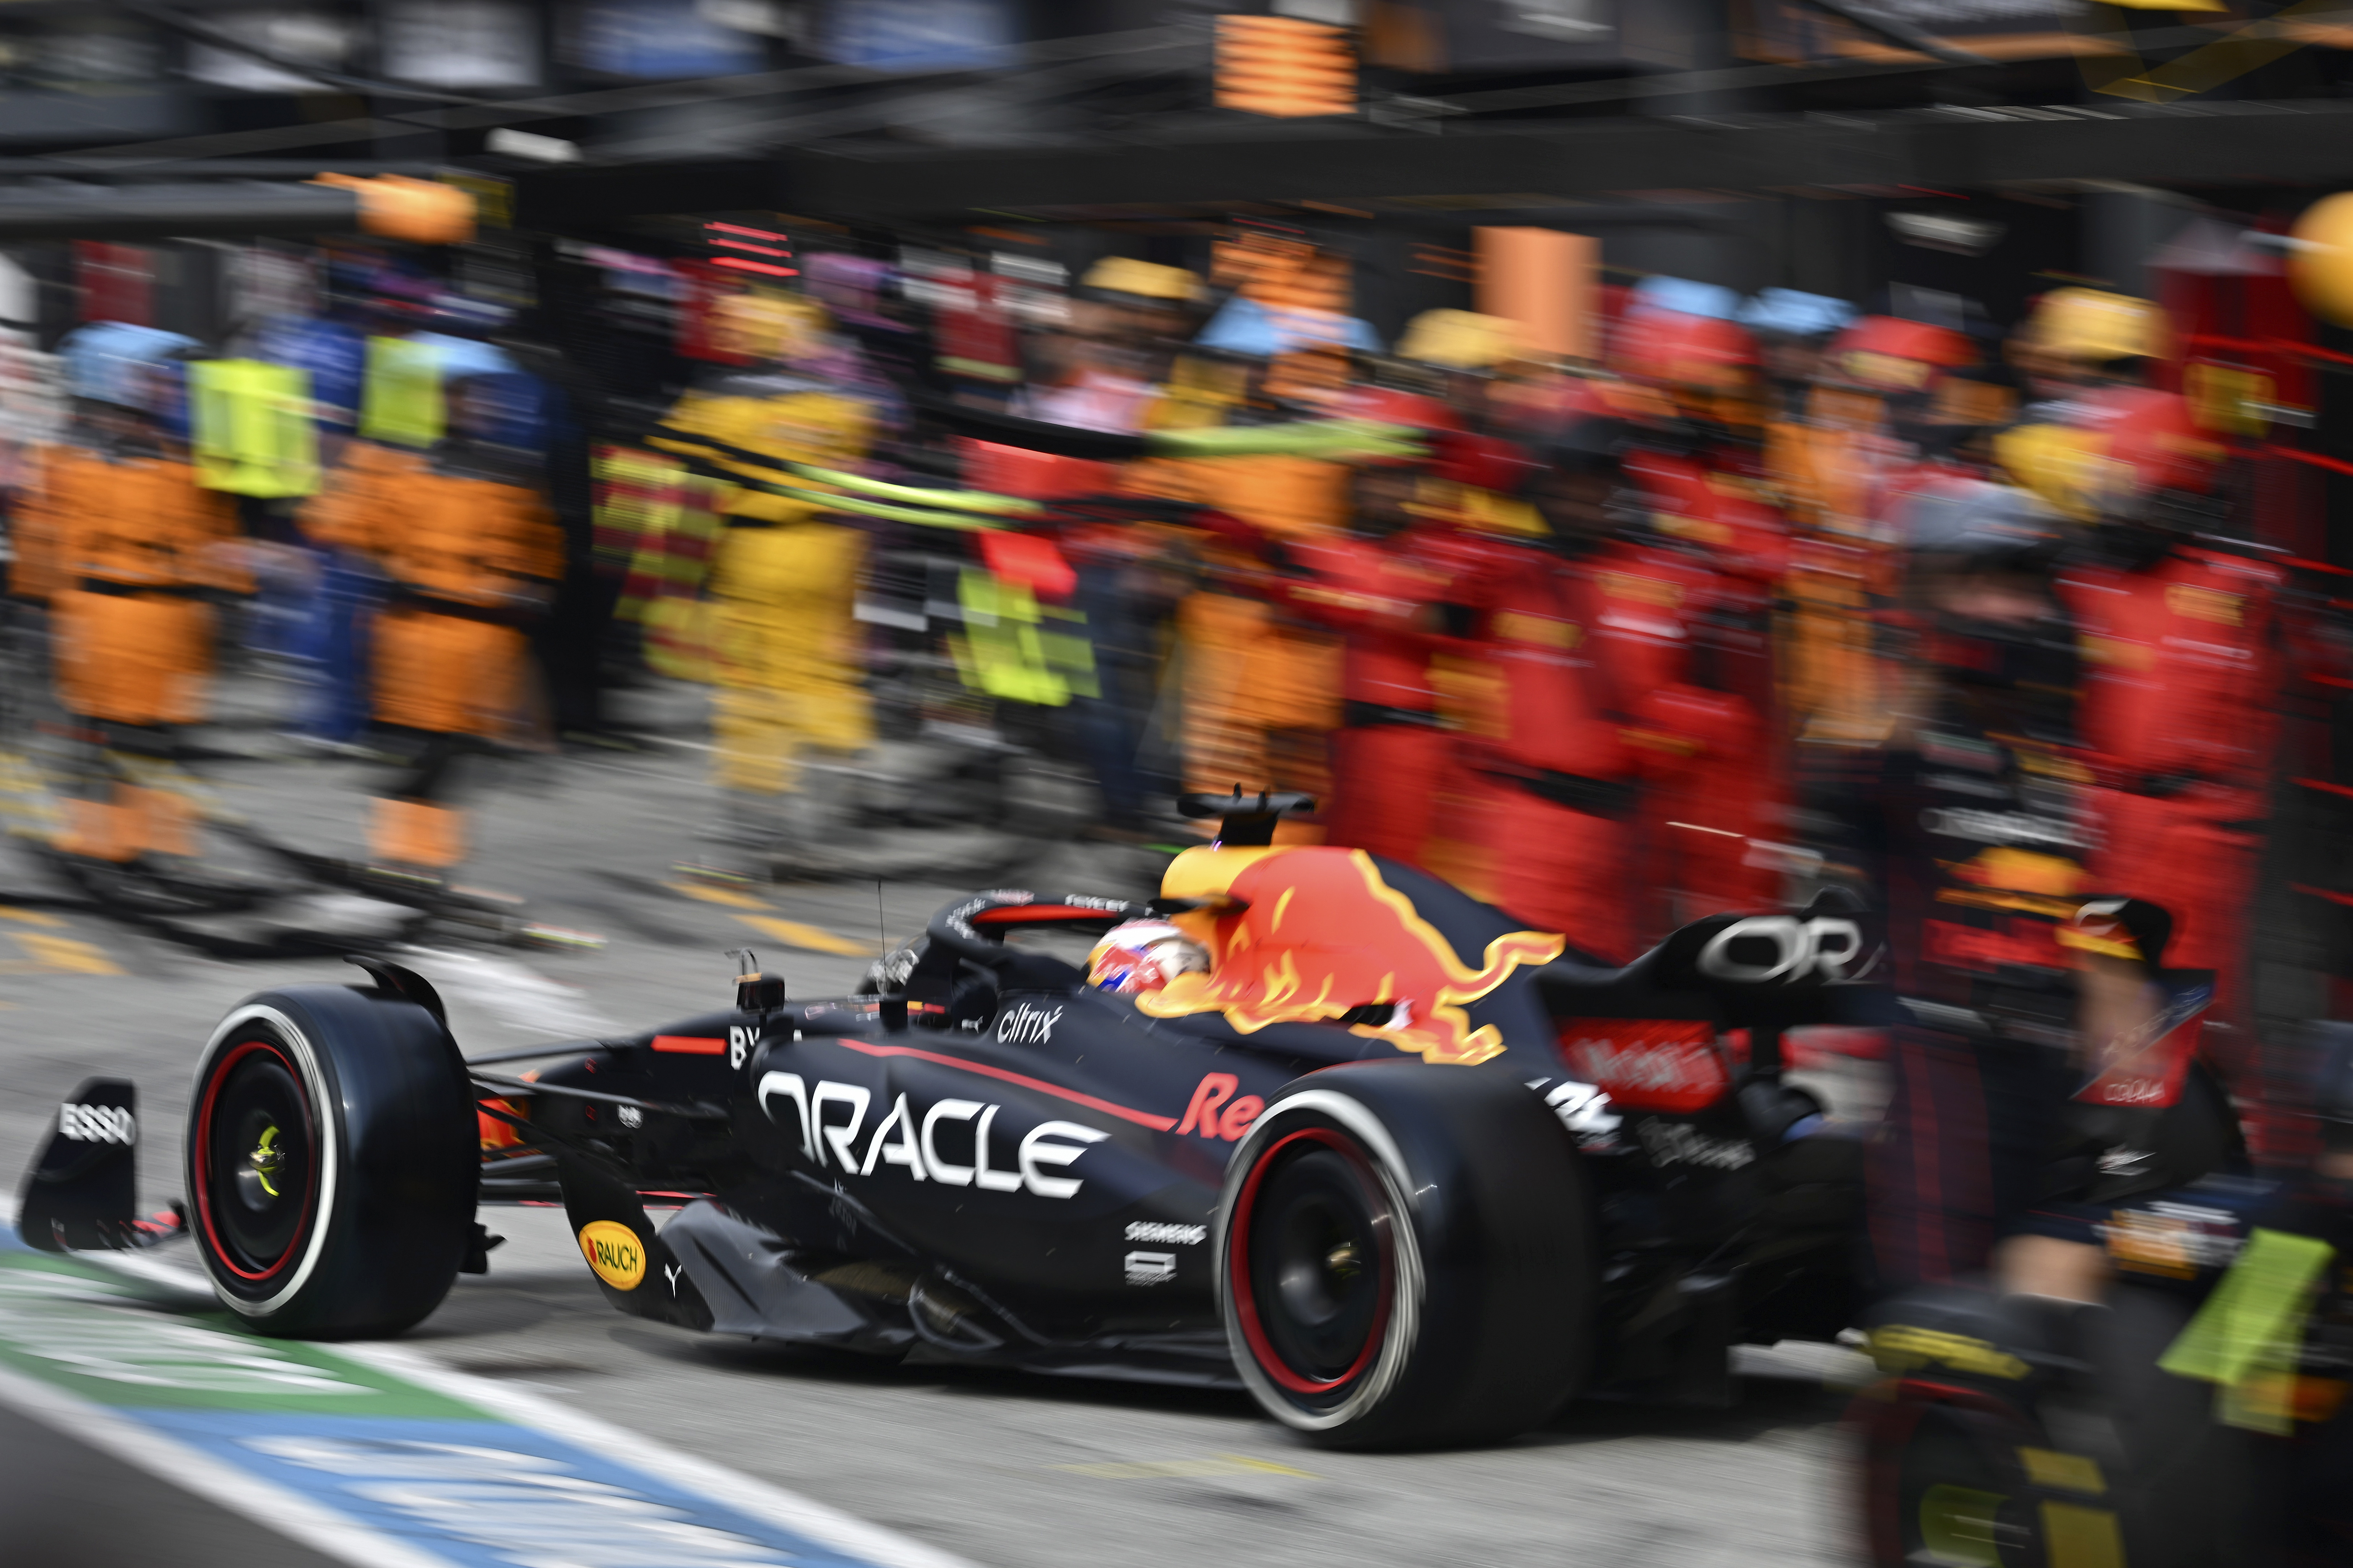 F1 leader Max Verstappen returns to his Orange Army at Dutch GP